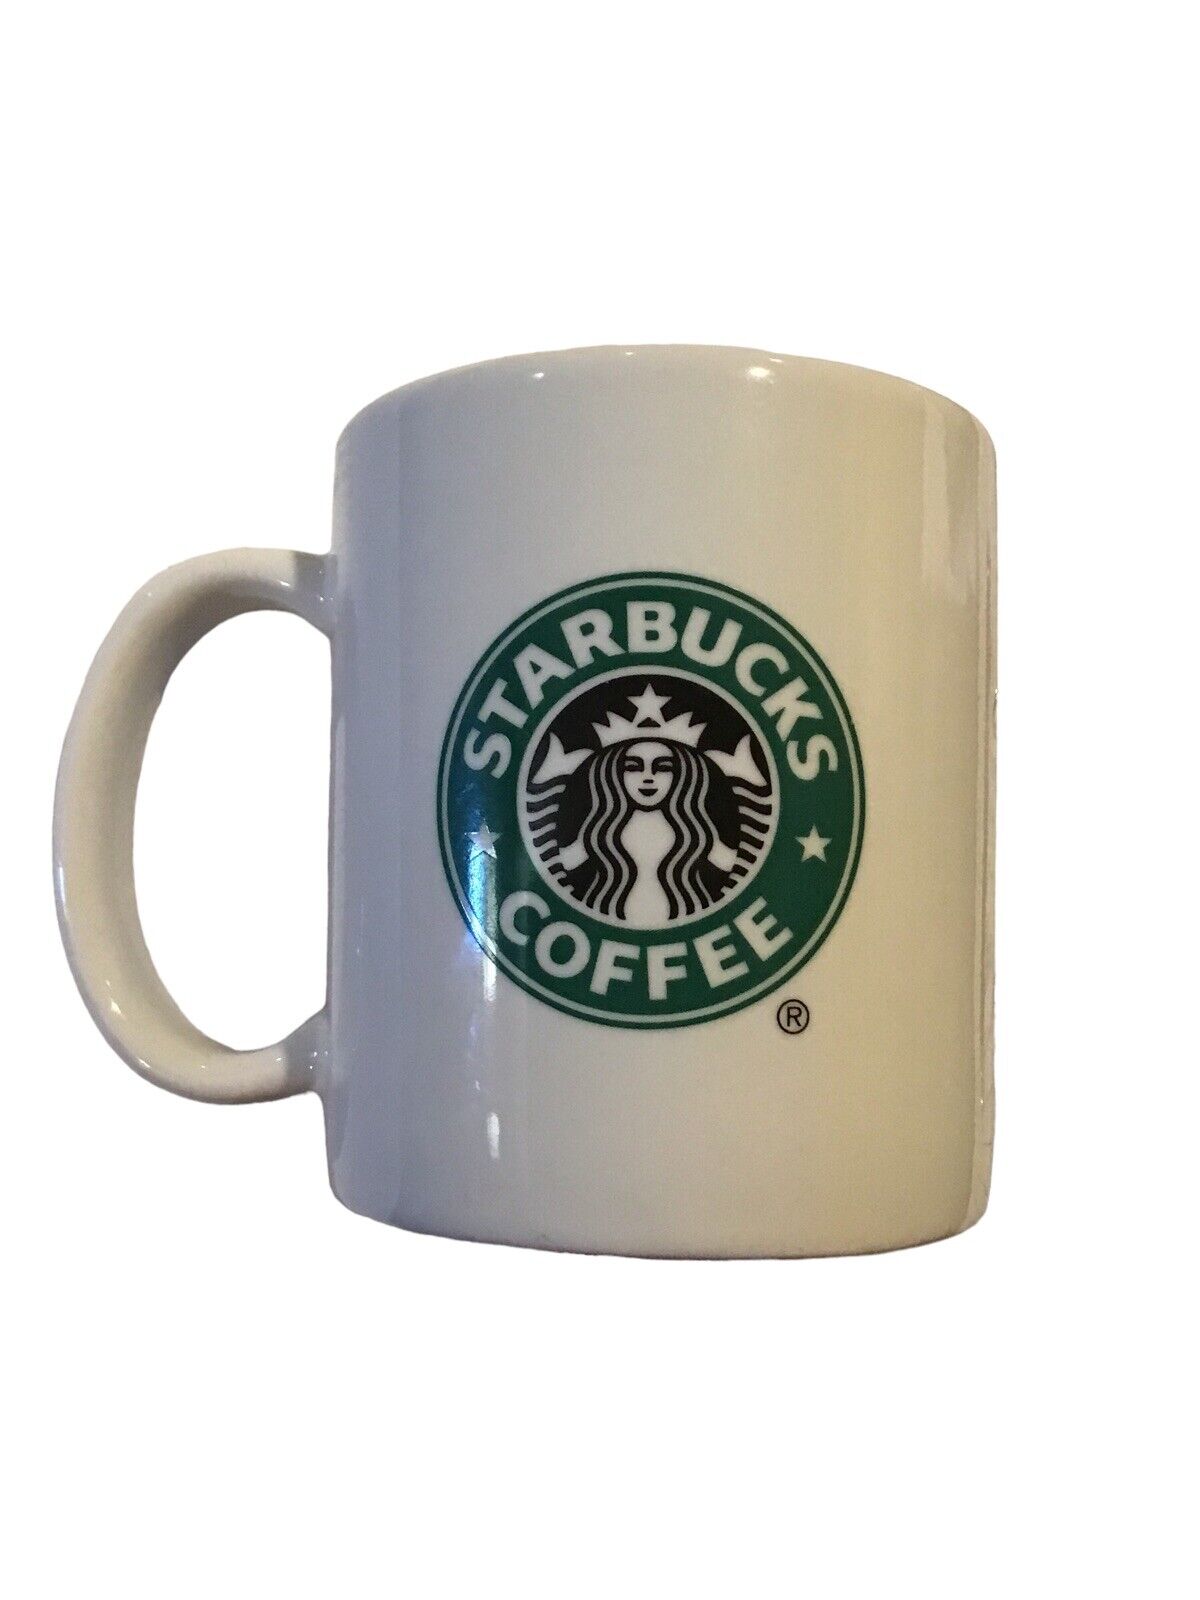 Starbucks Ceramic Coffee Mug  Cup 2004 White Green Mermaid Logo.